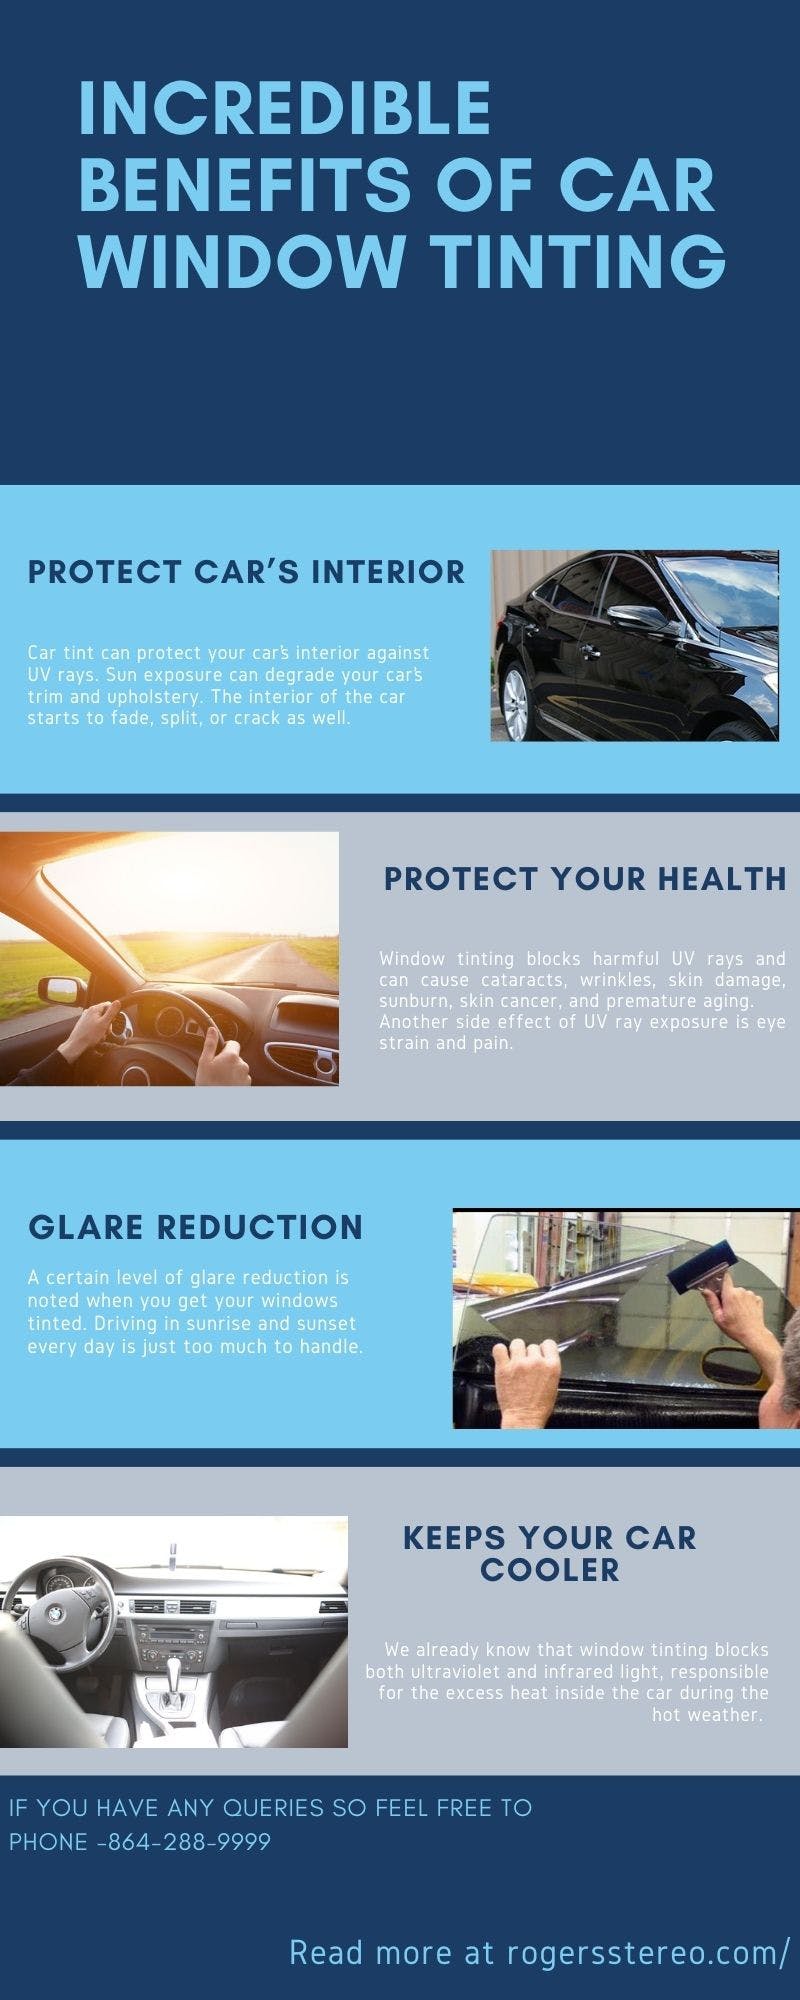 Incredible Benefits of Car Window Tinting.jpg